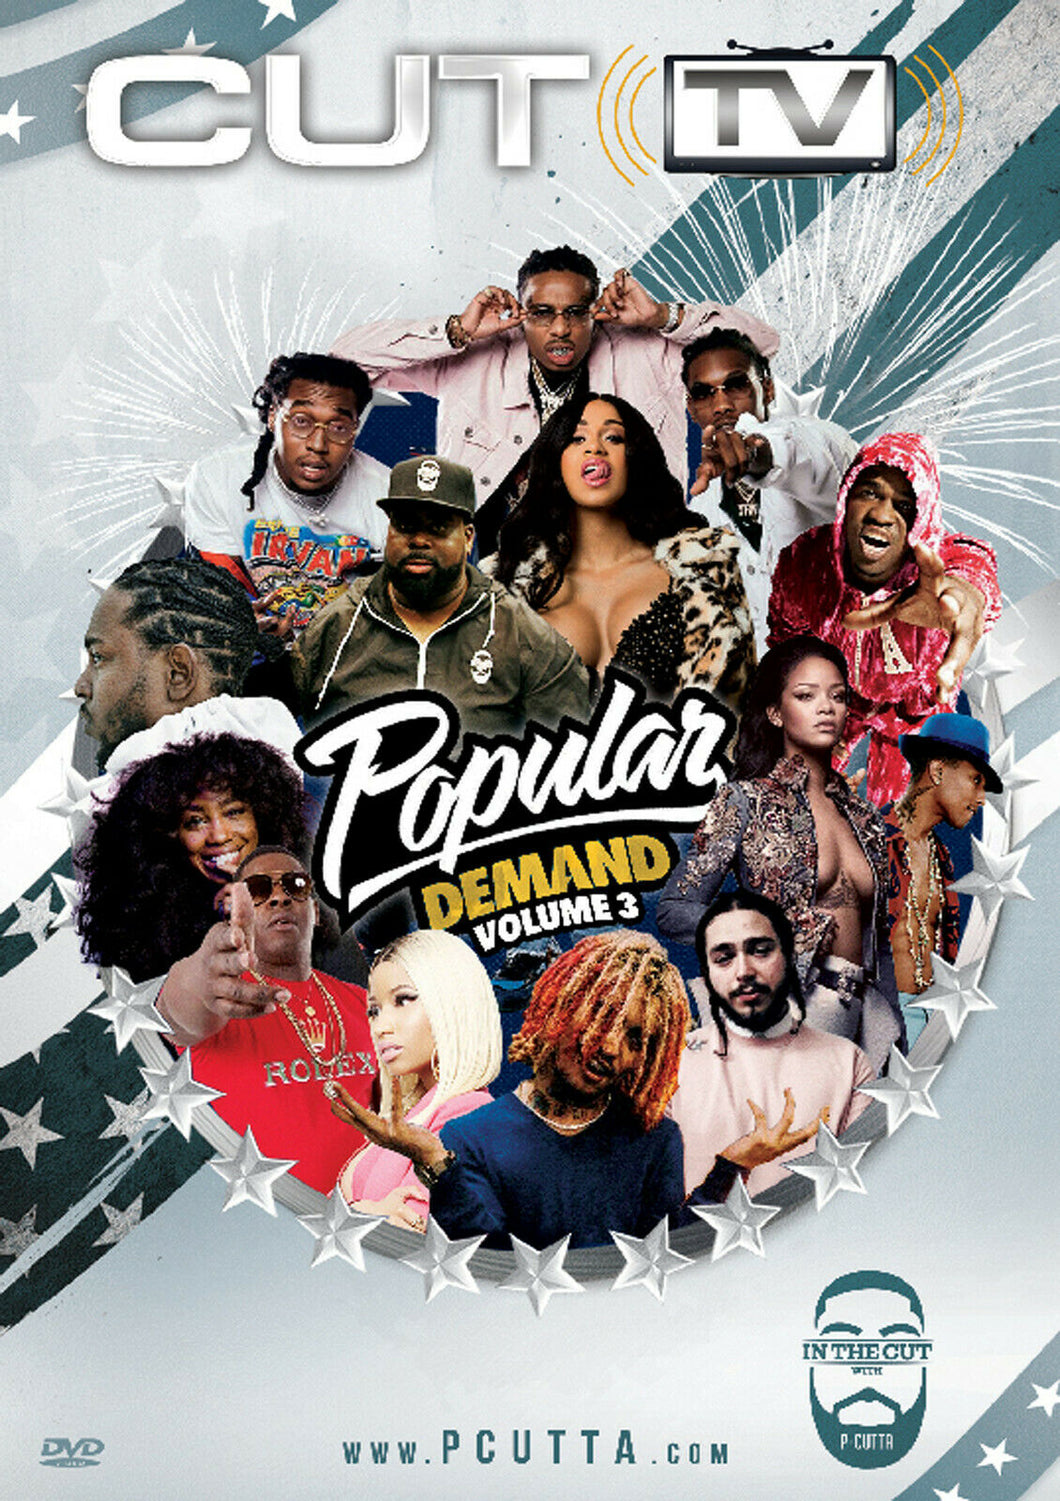 CUT TV - POPULAR DEMAND 4 (MUSIC VIDEO DVD) Drake, Kendrick Lamar, Sza, Jay-Z...